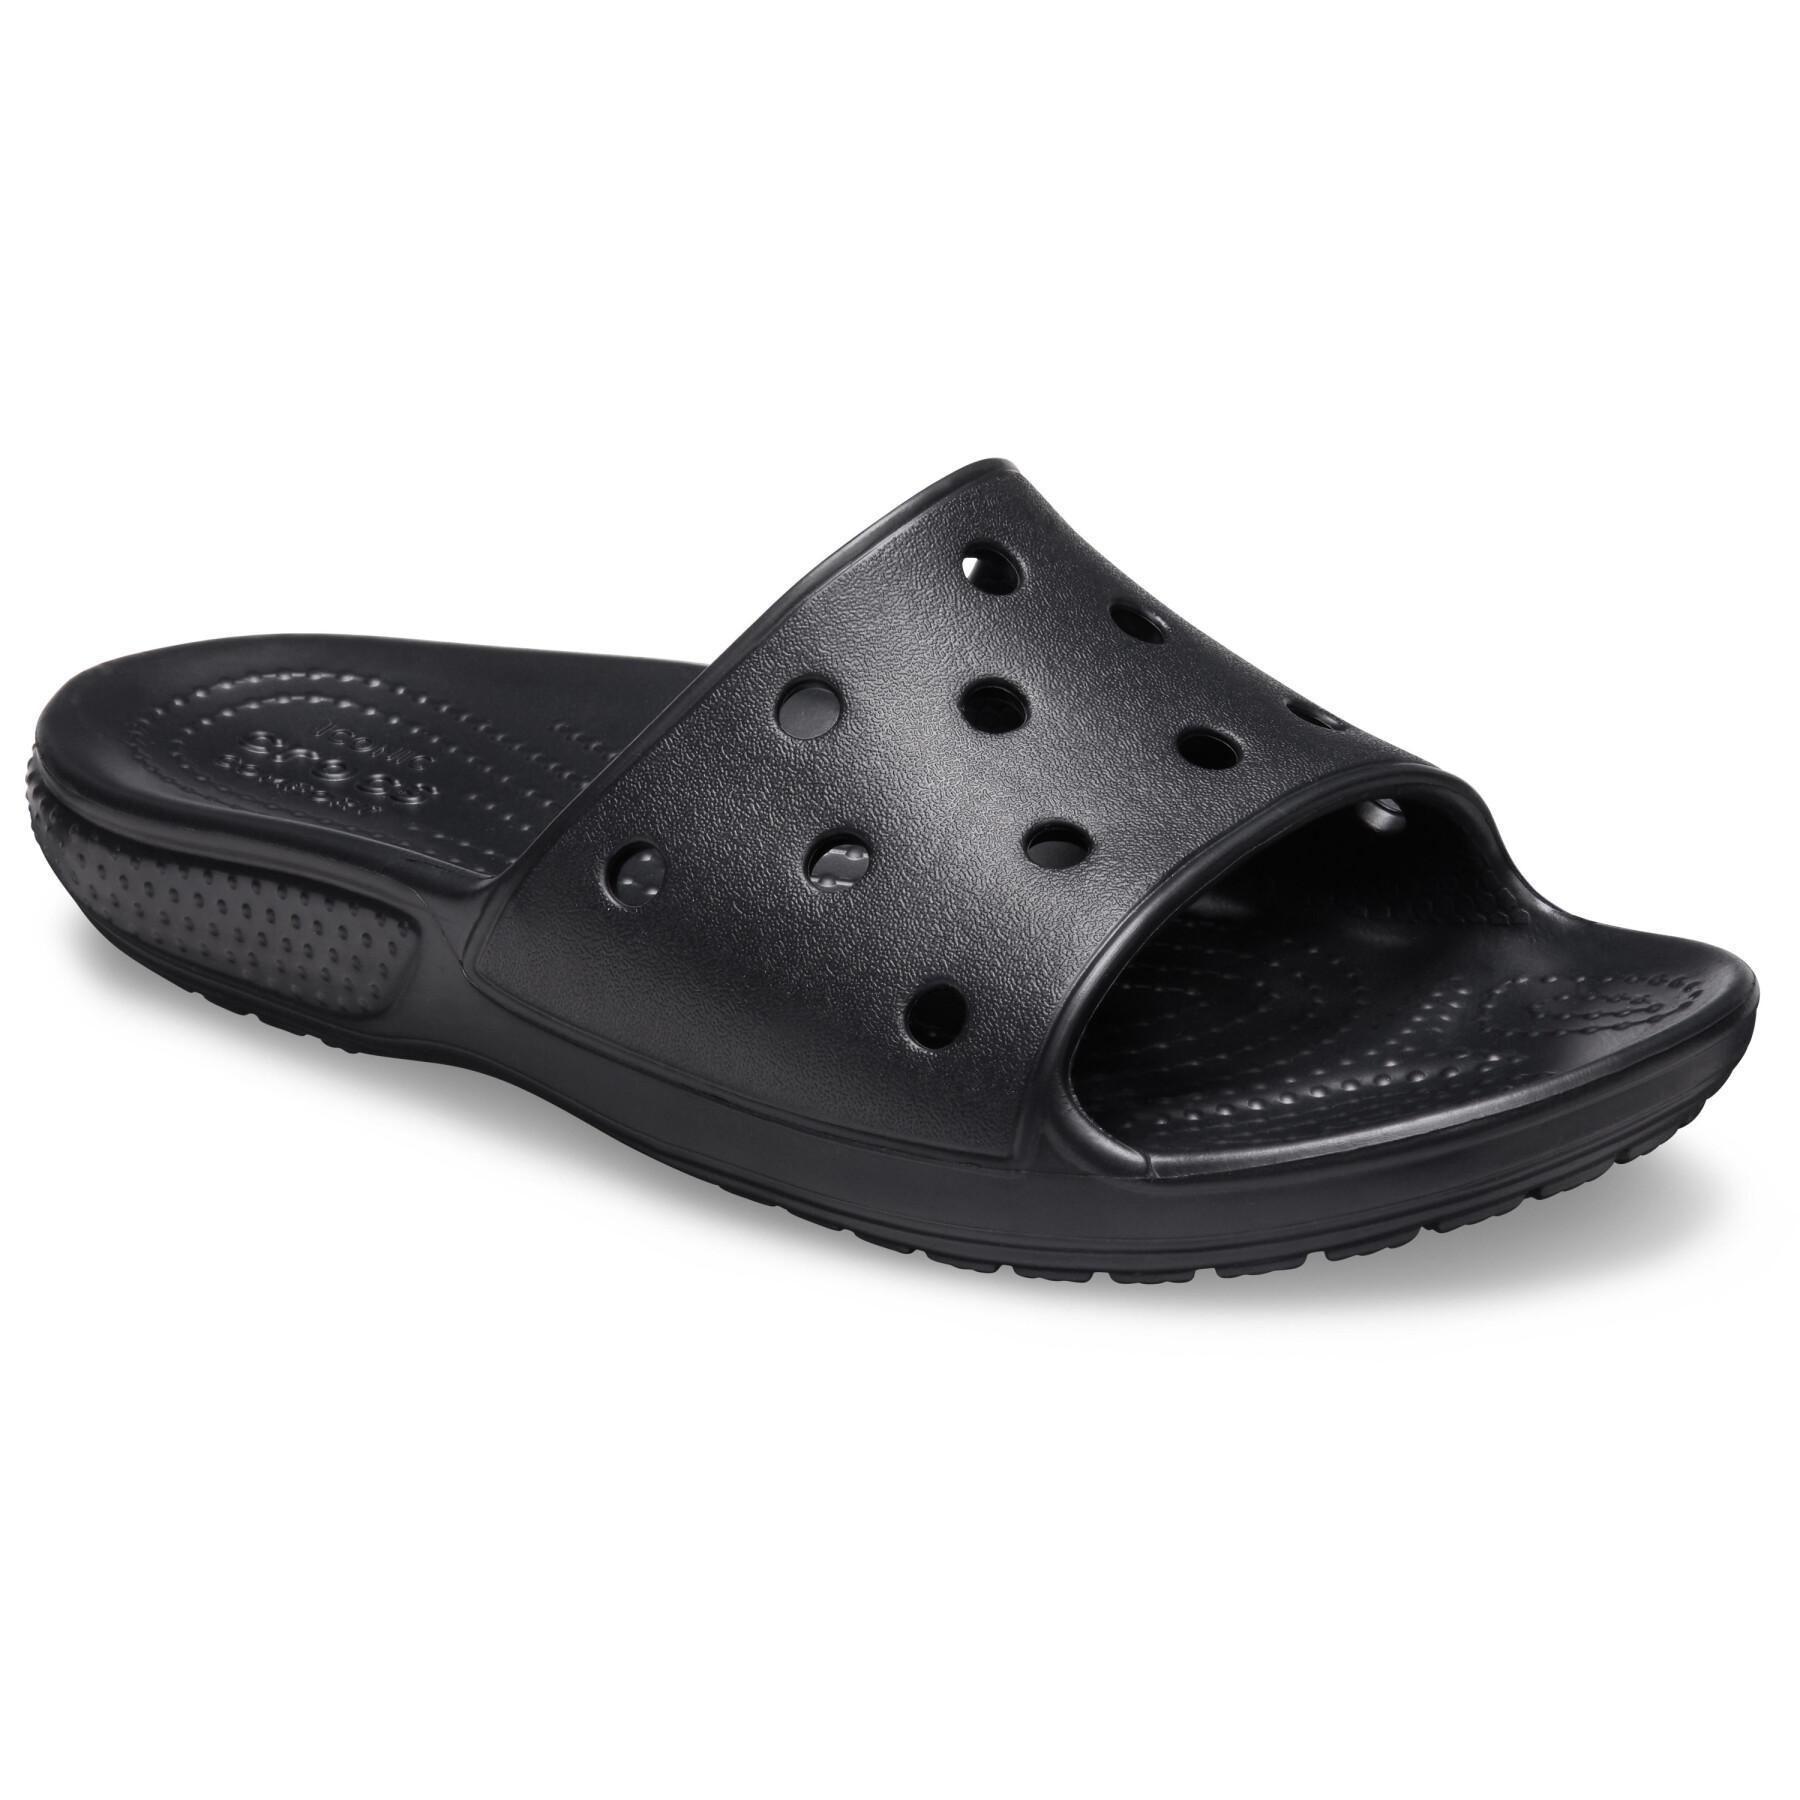 Children's sandals Crocs classic slide